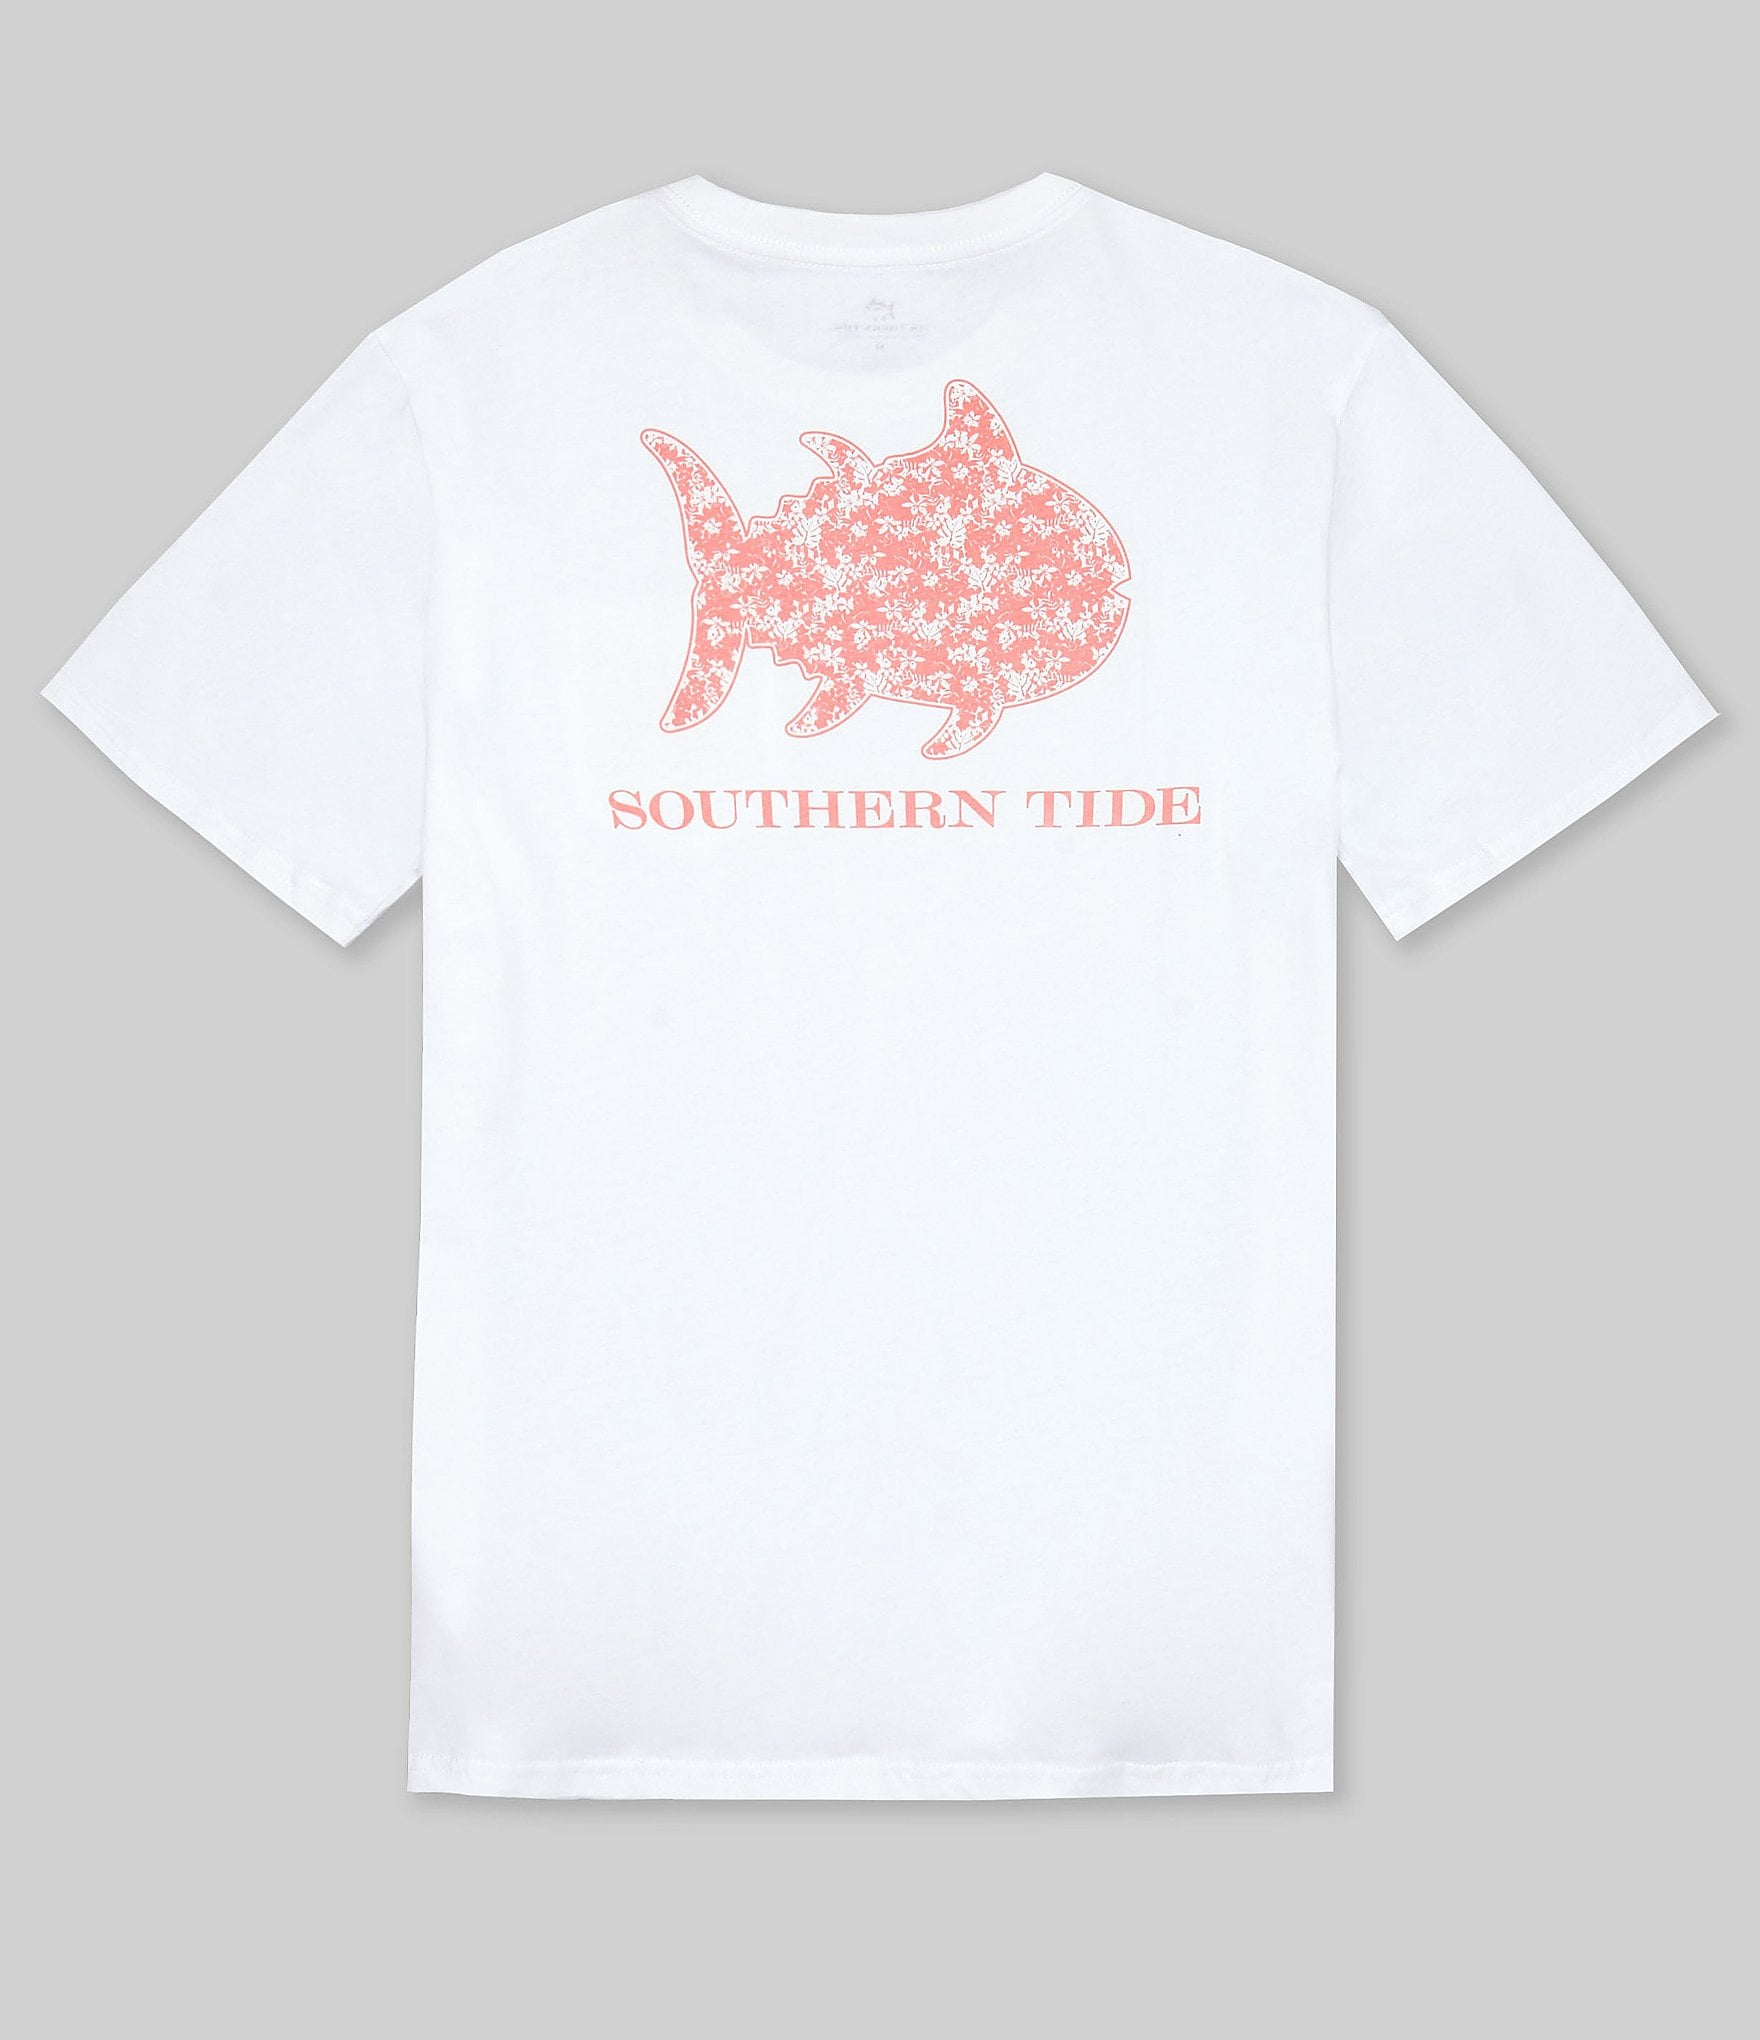 Southern Tide Men's Tee Shirts